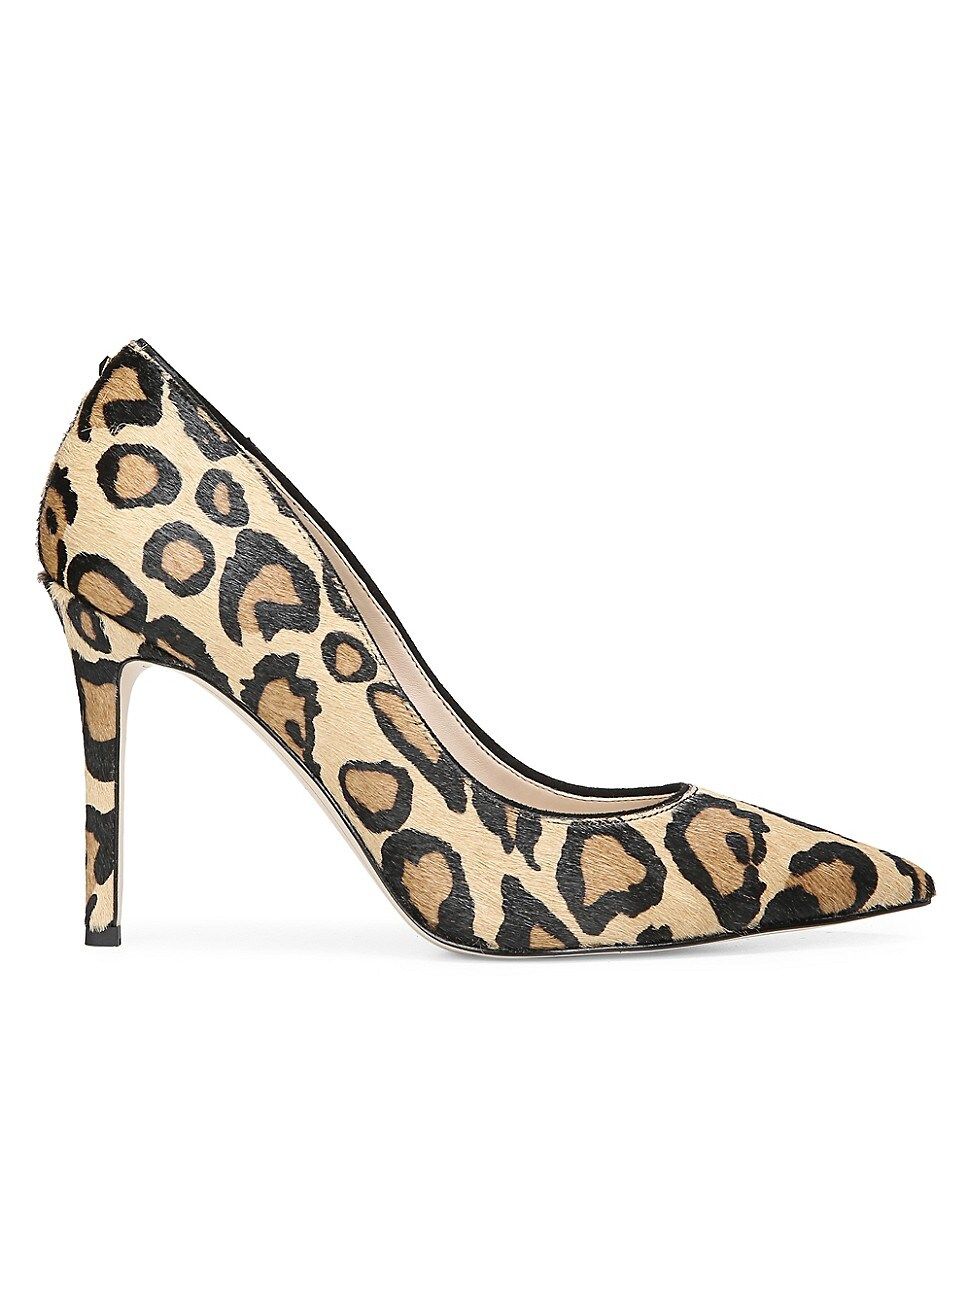 Sam Edelman Women's Hazel Leopard-Print Calf Hair Pumps - Size 9.5 | Saks Fifth Avenue